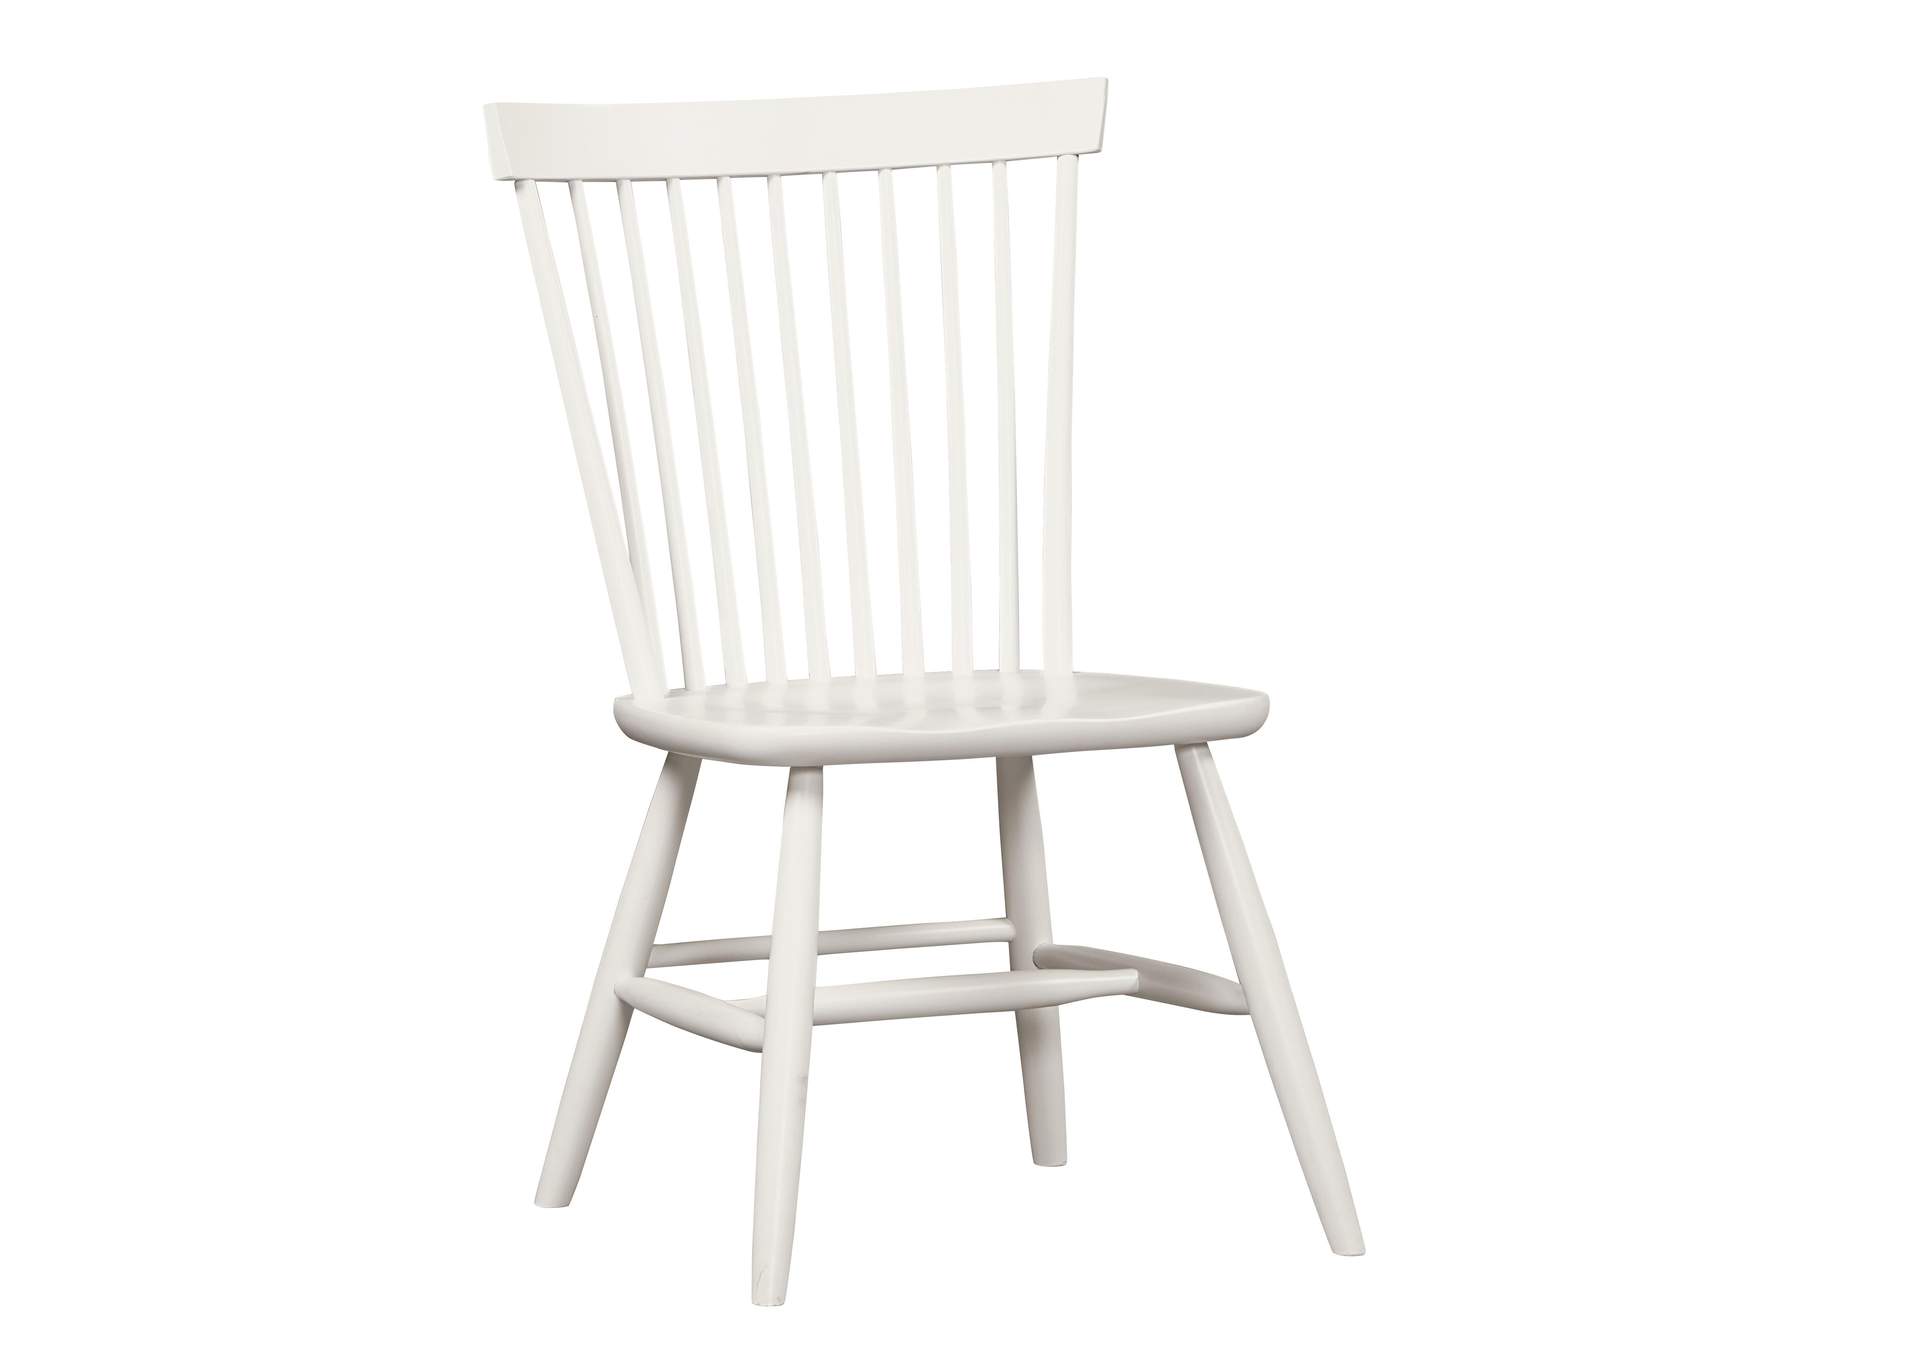 Bonanza-White Desk Chair,Vaughan-Bassett